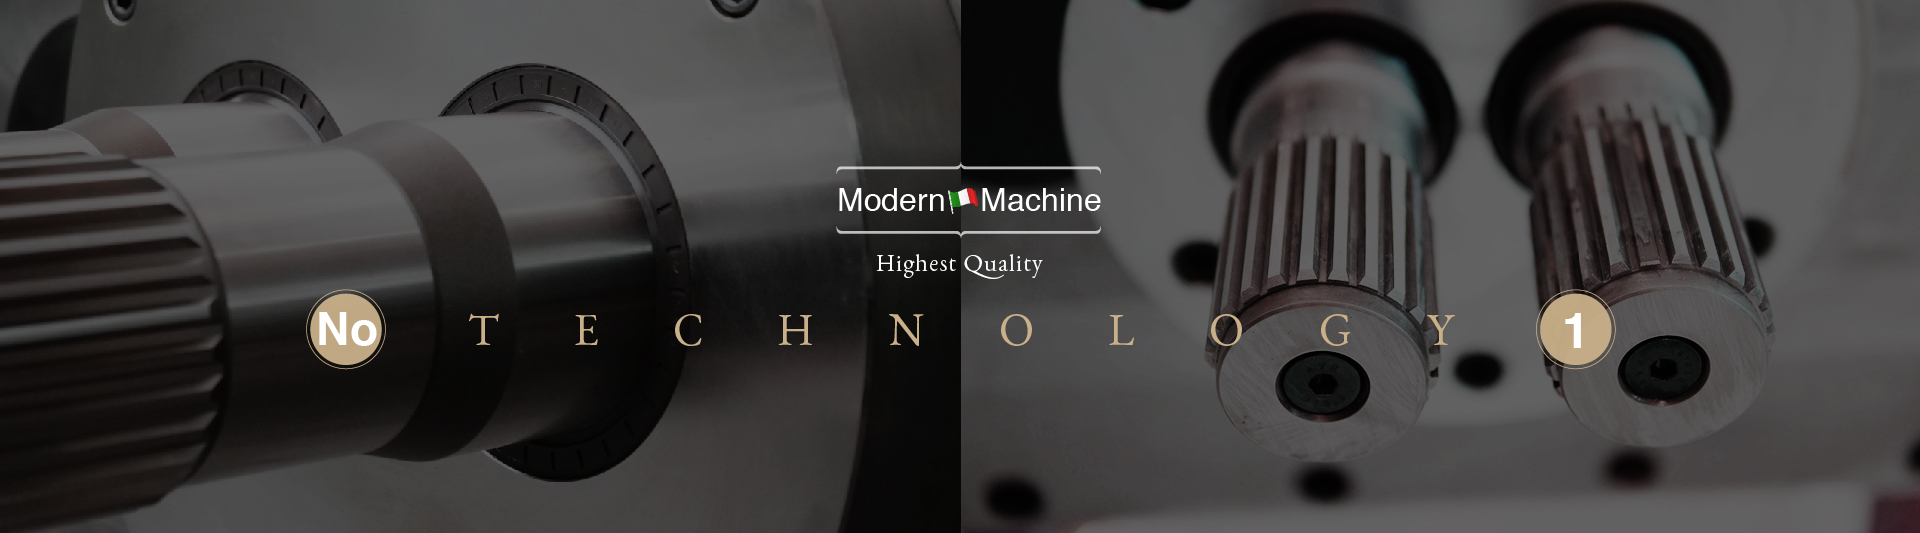 Modern machine highest quality